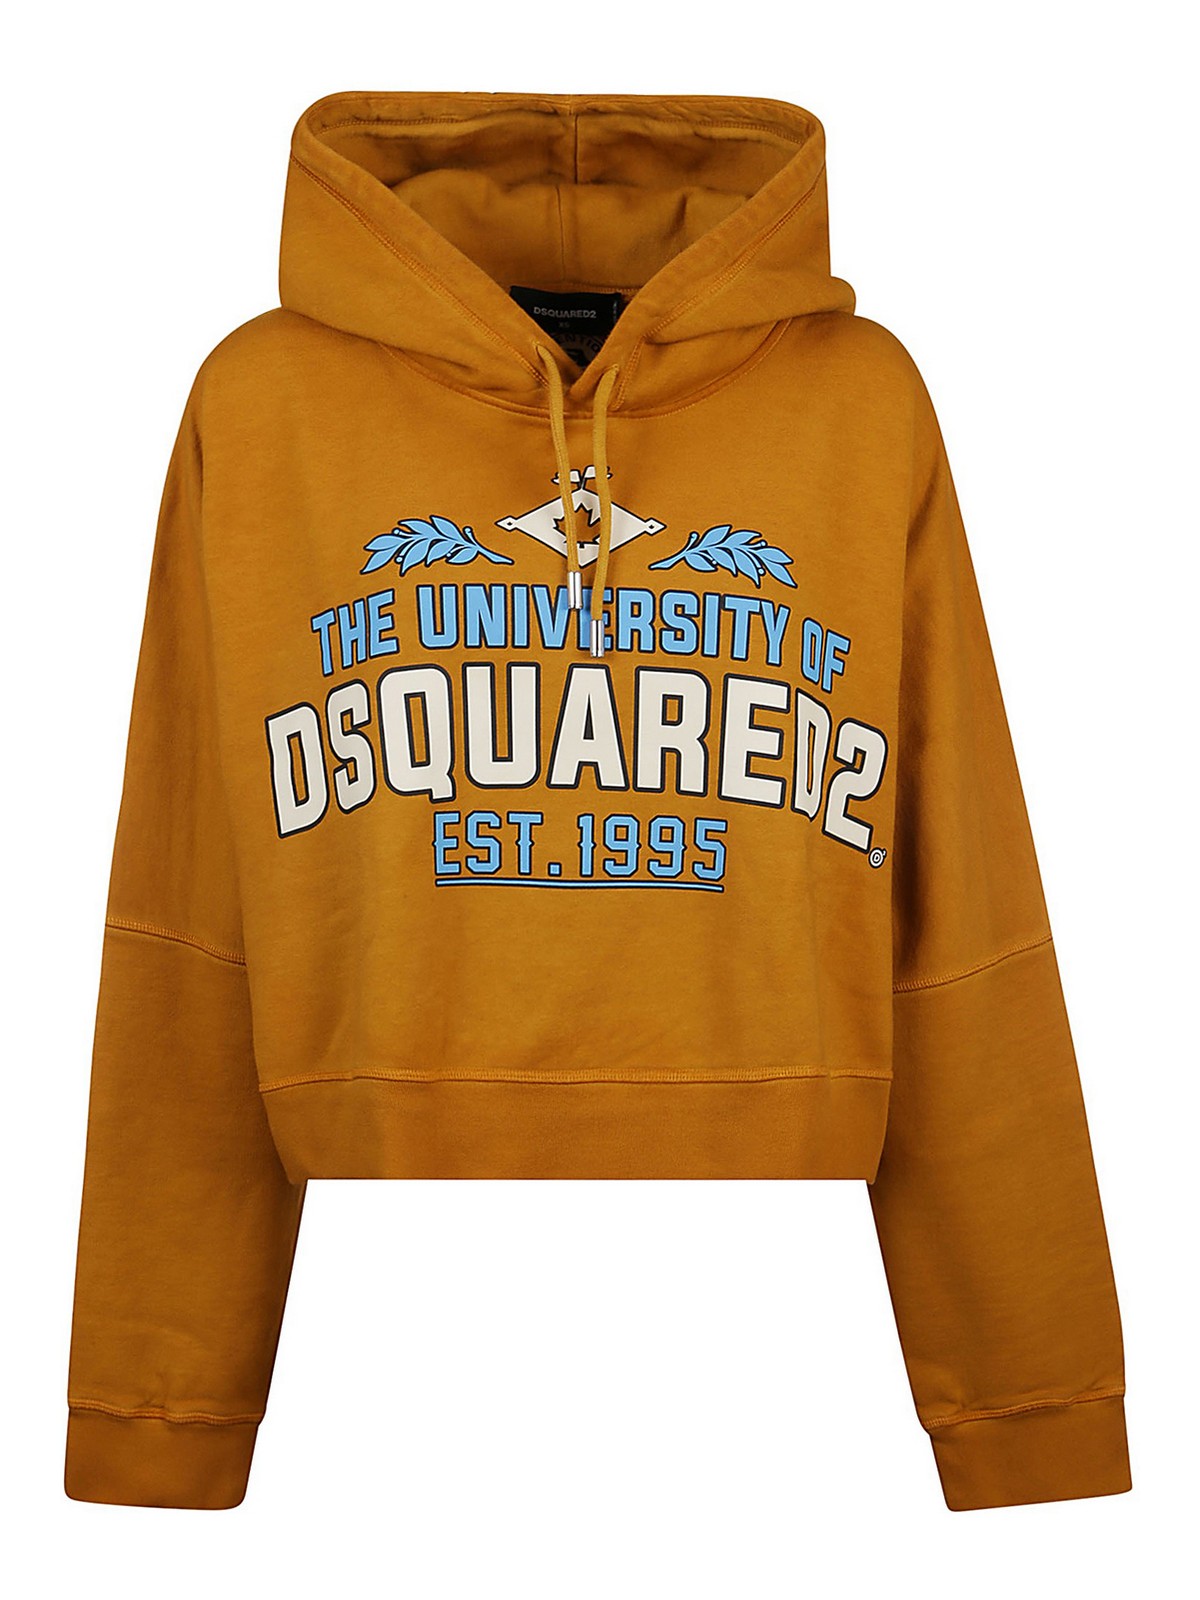 college style sweatshirts